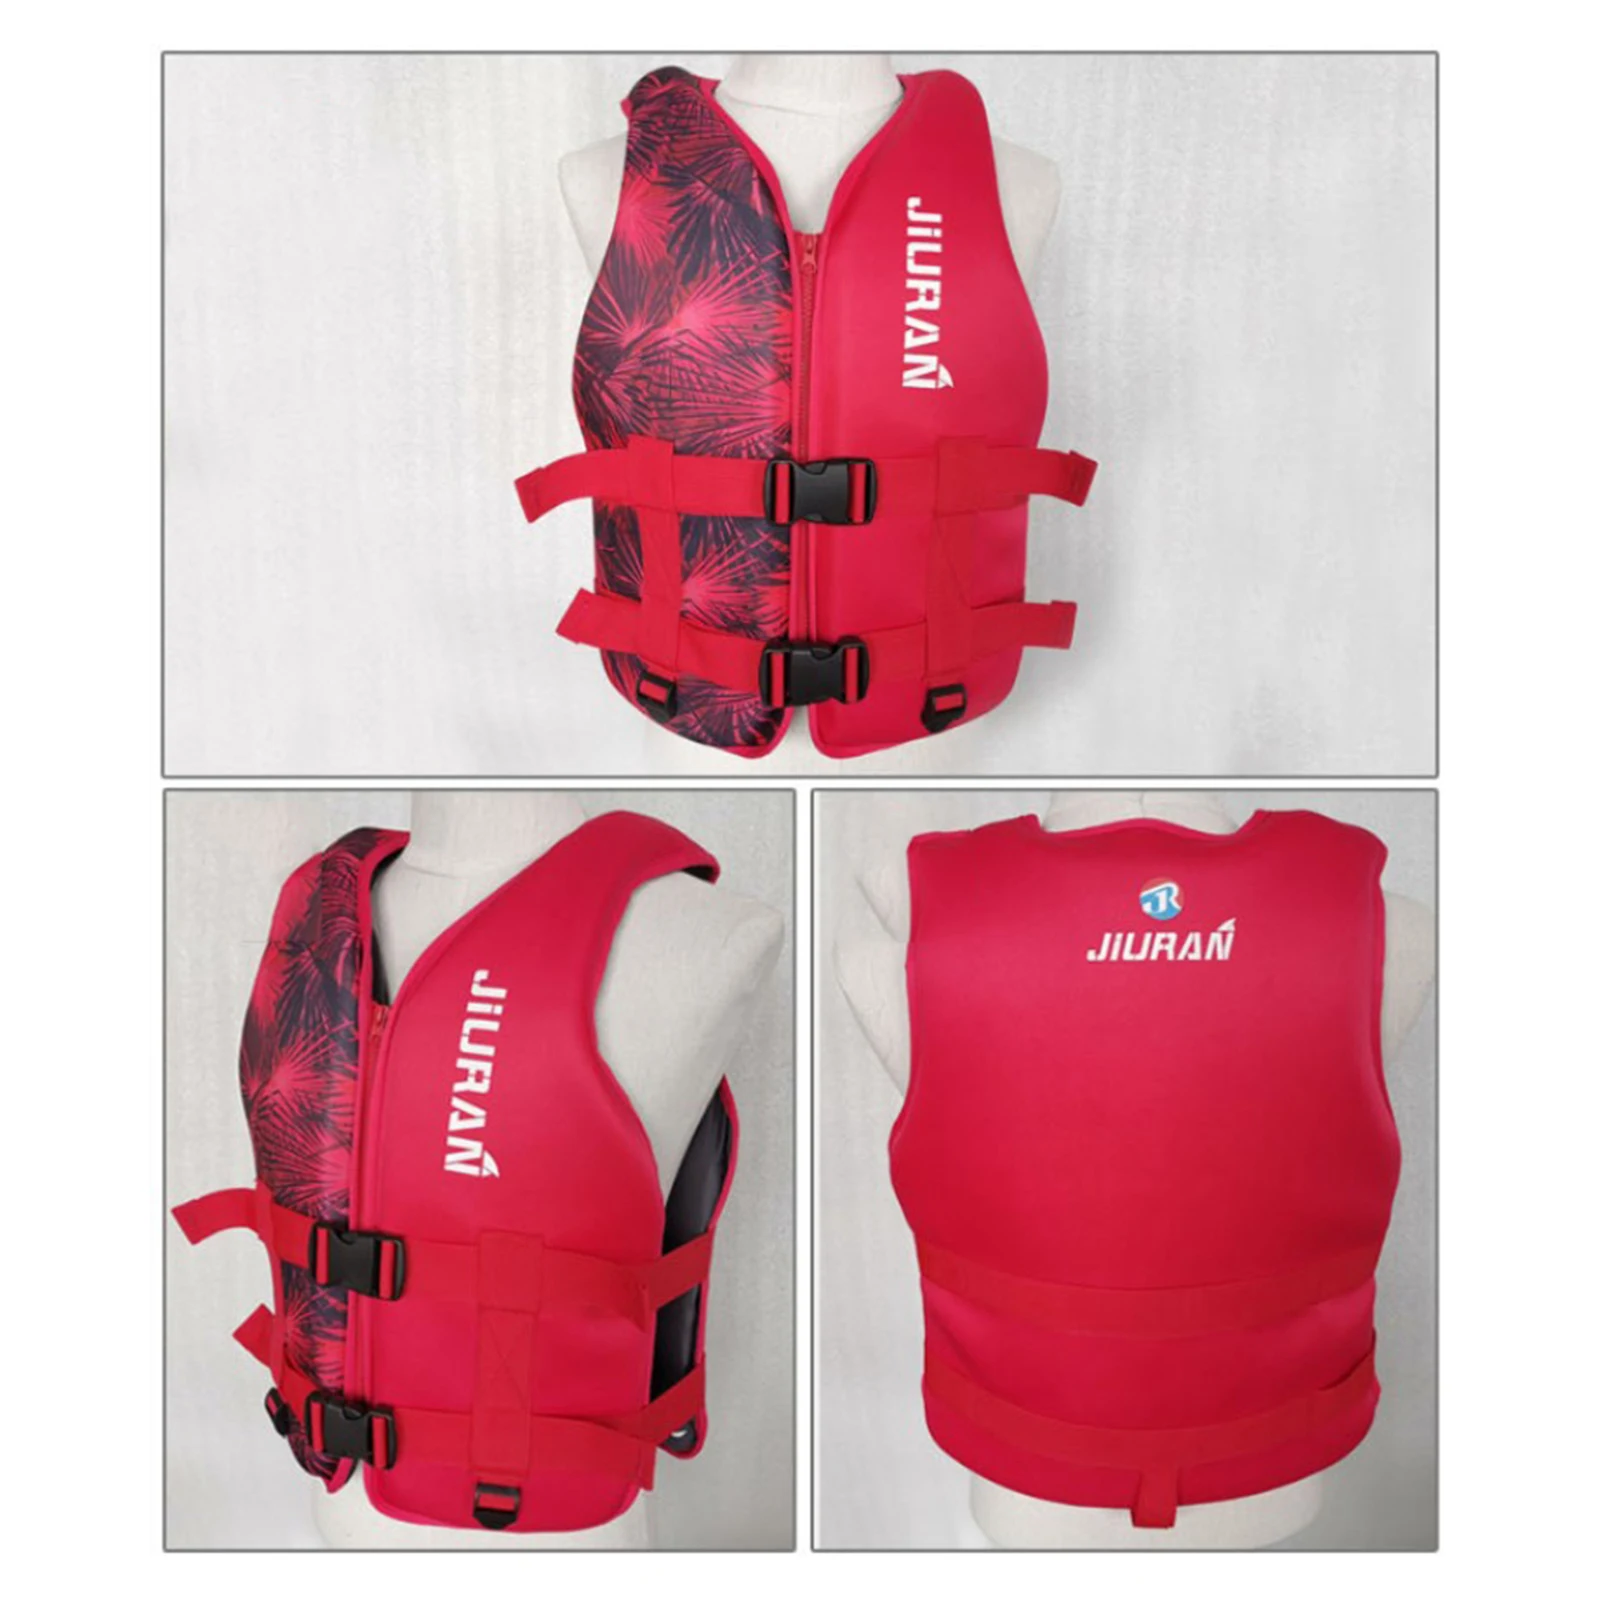 Adult Kids Life Vest Swimming Vest Kayak Ski Buoyancy Aid Sailing Watersport Impact Life Jacket Personal Floatation Device